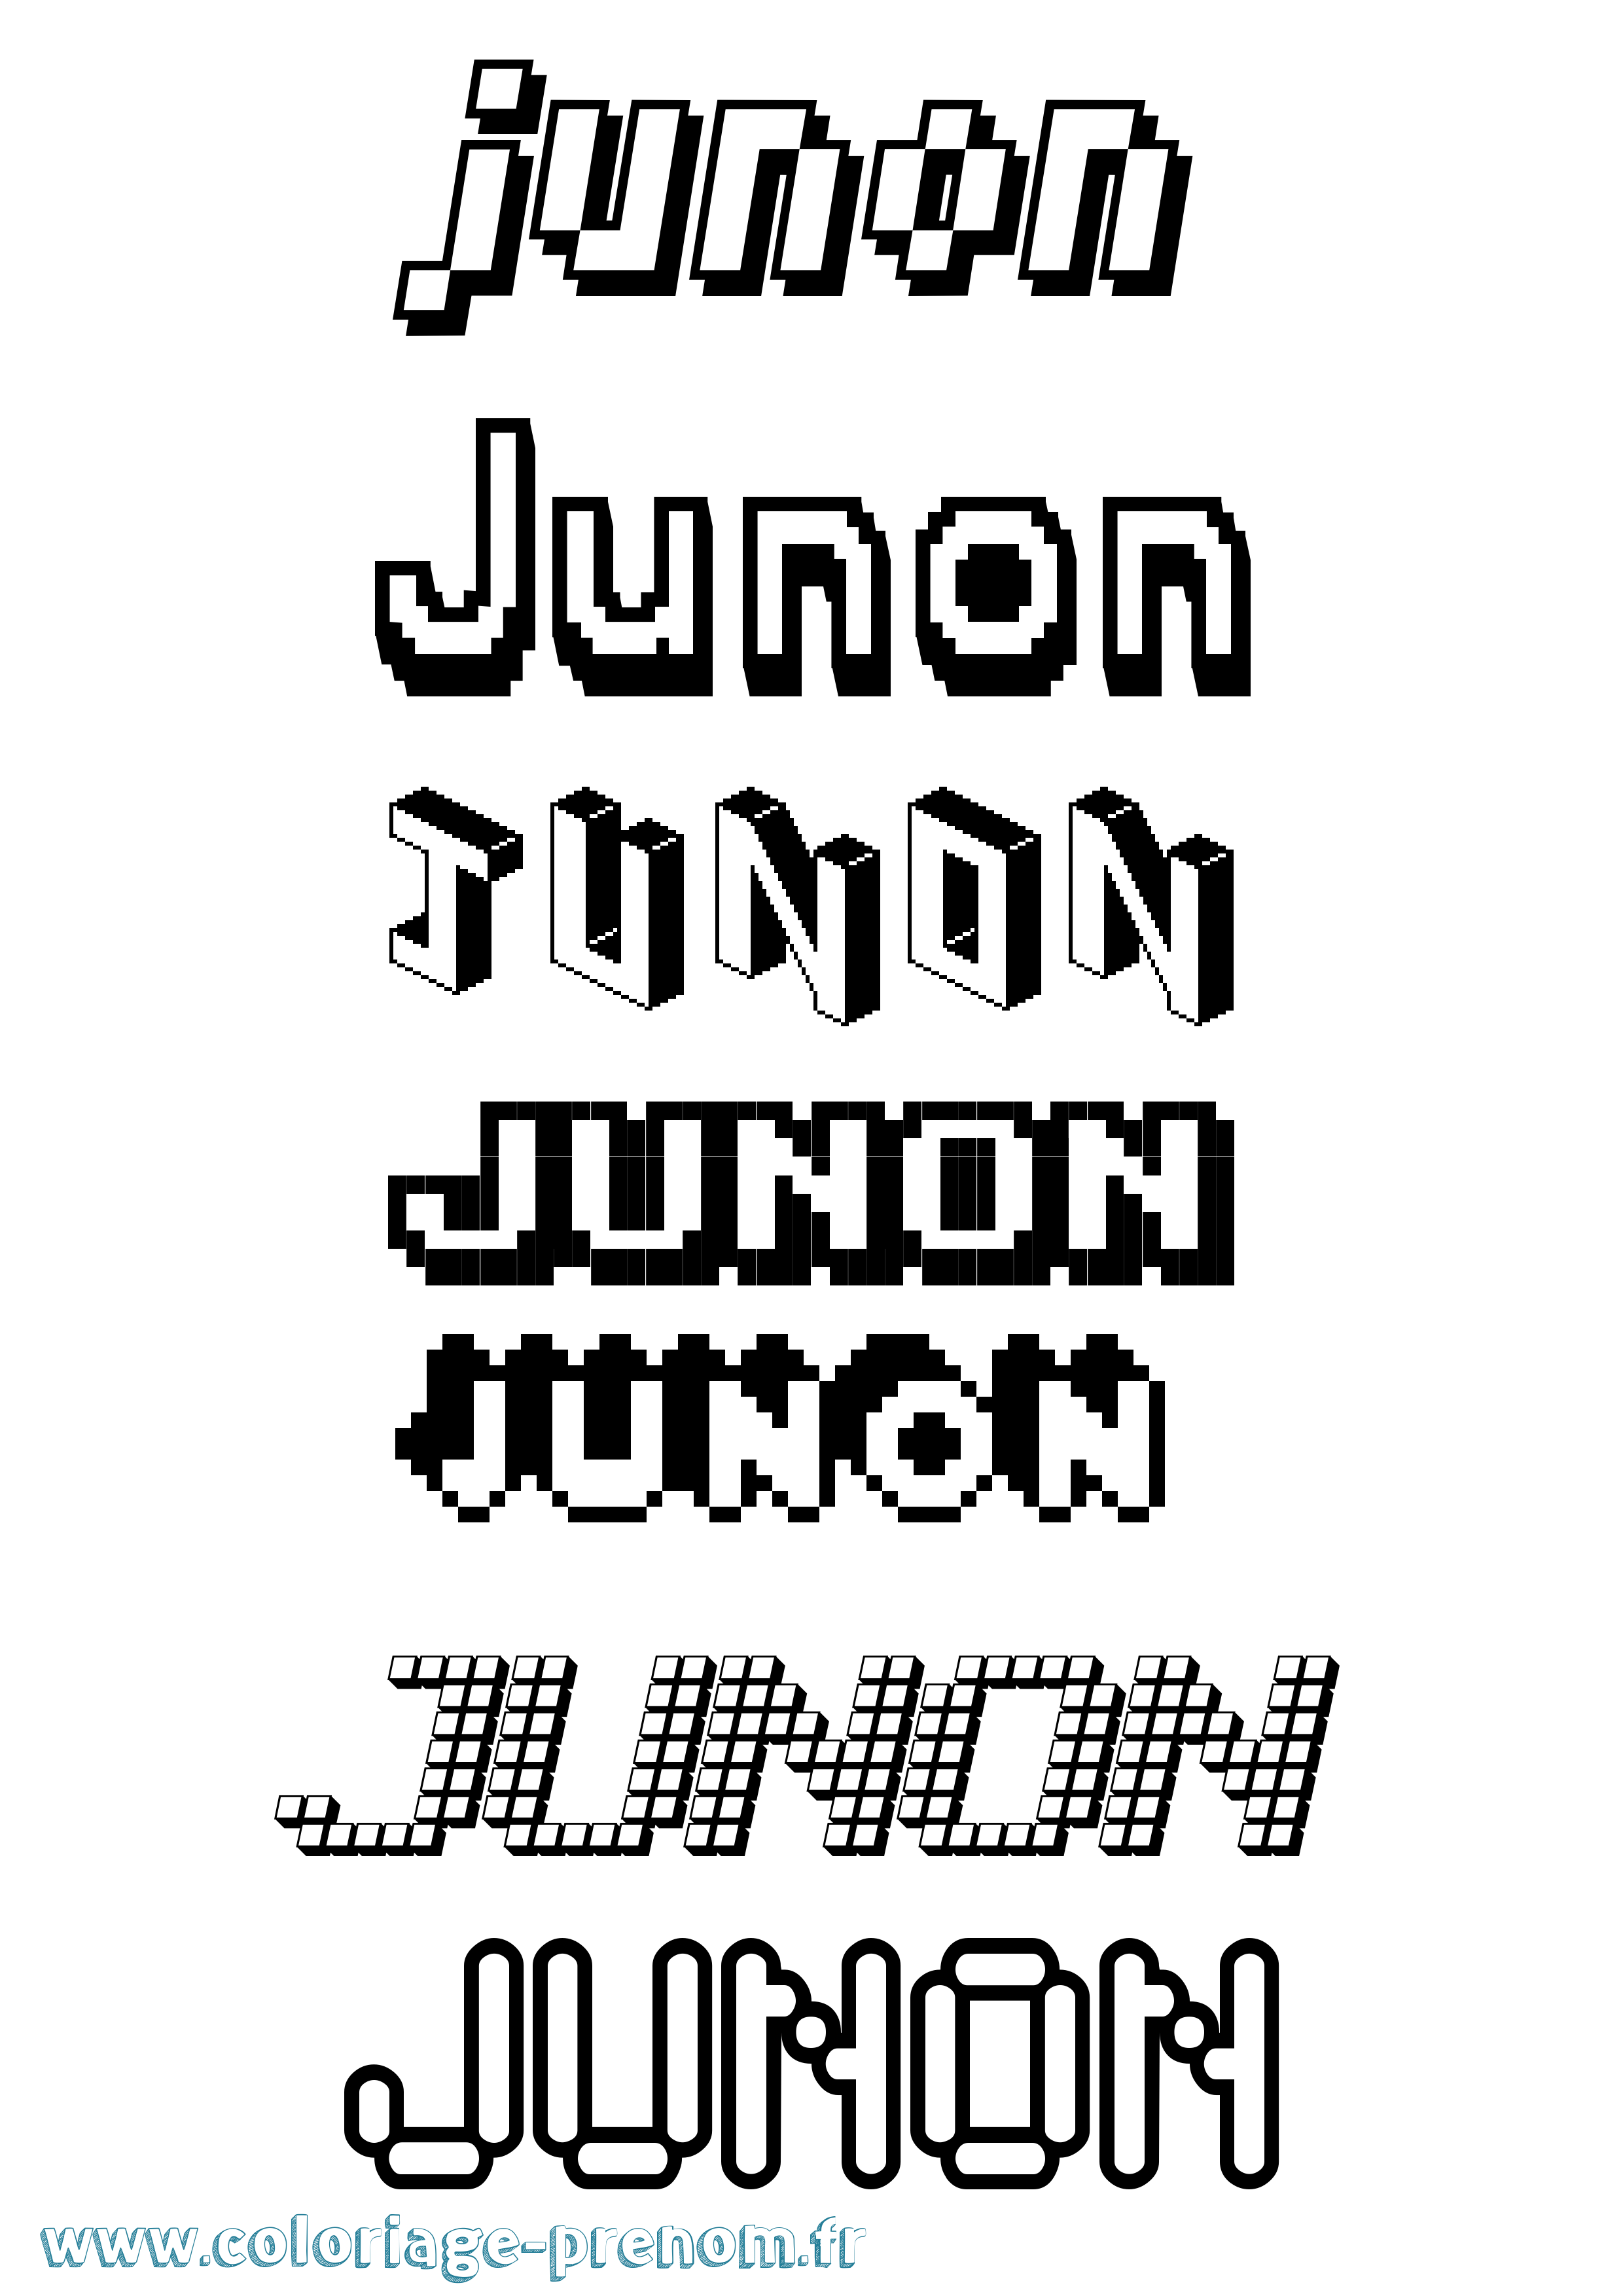 Coloriage prénom Junon Pixel